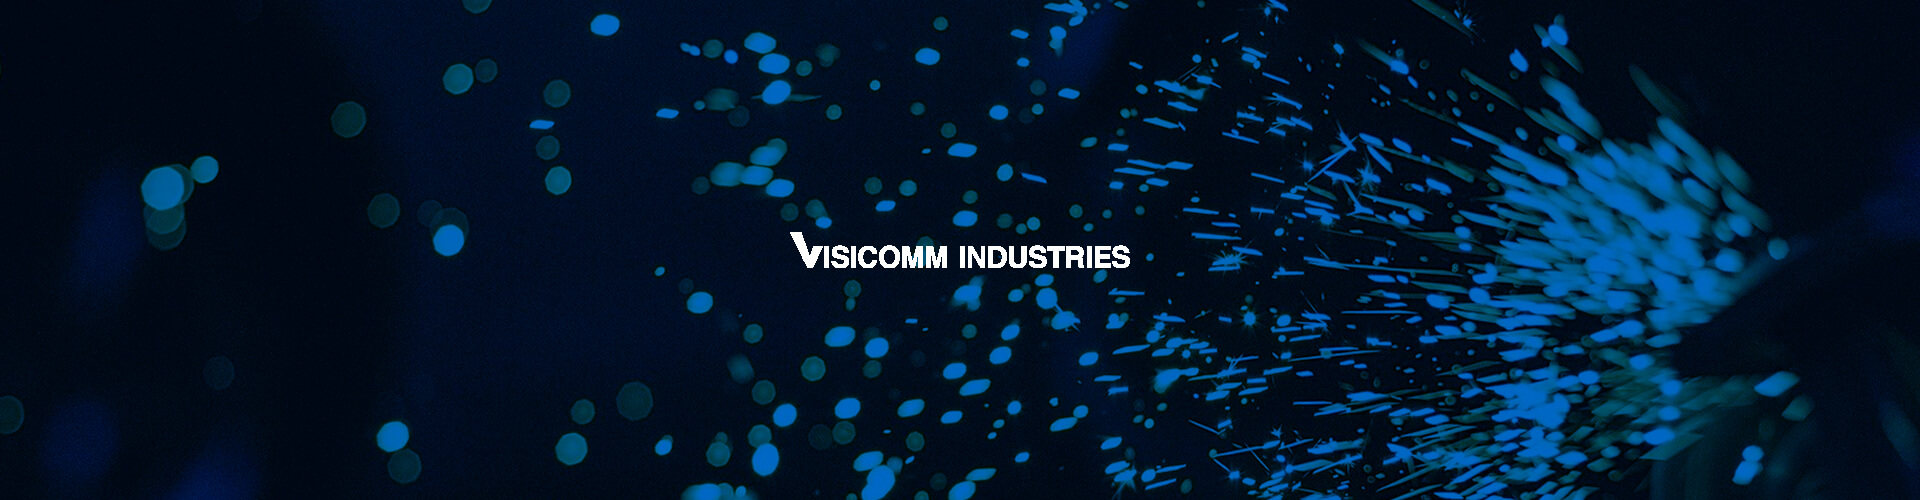 Visicomm Industries banner